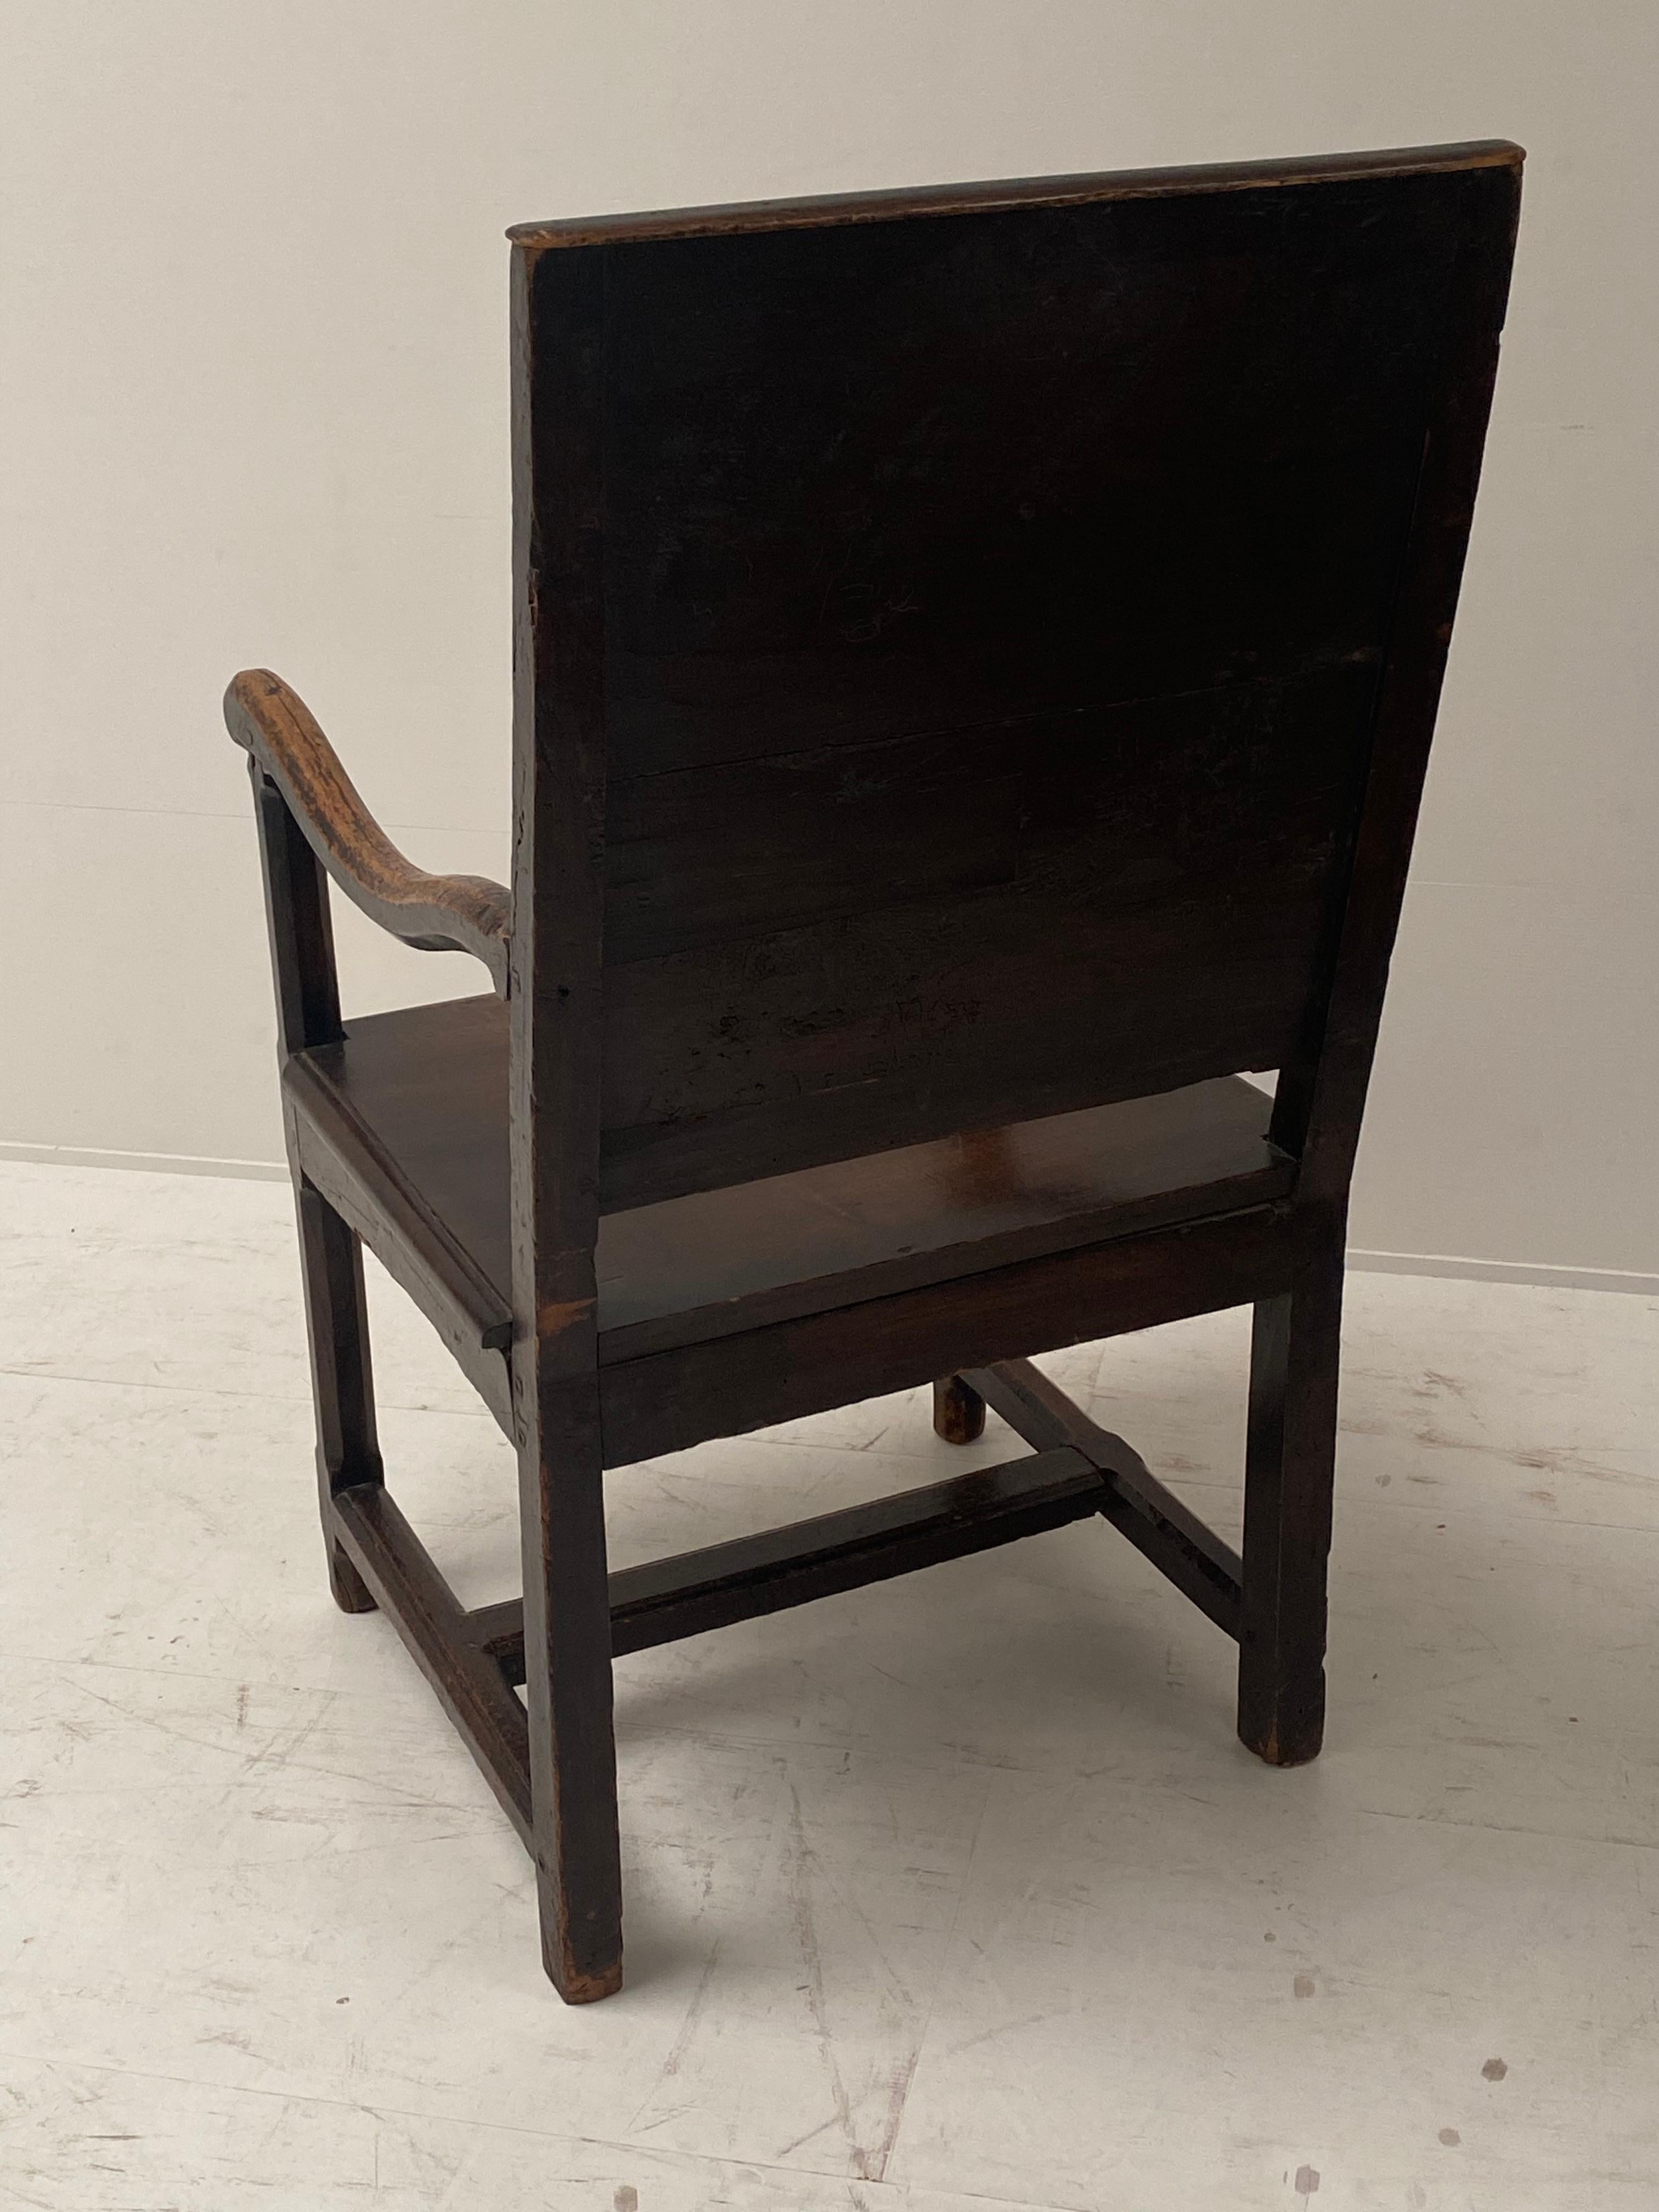 Chêne Chaise anglaise en bois, 17ème siècle